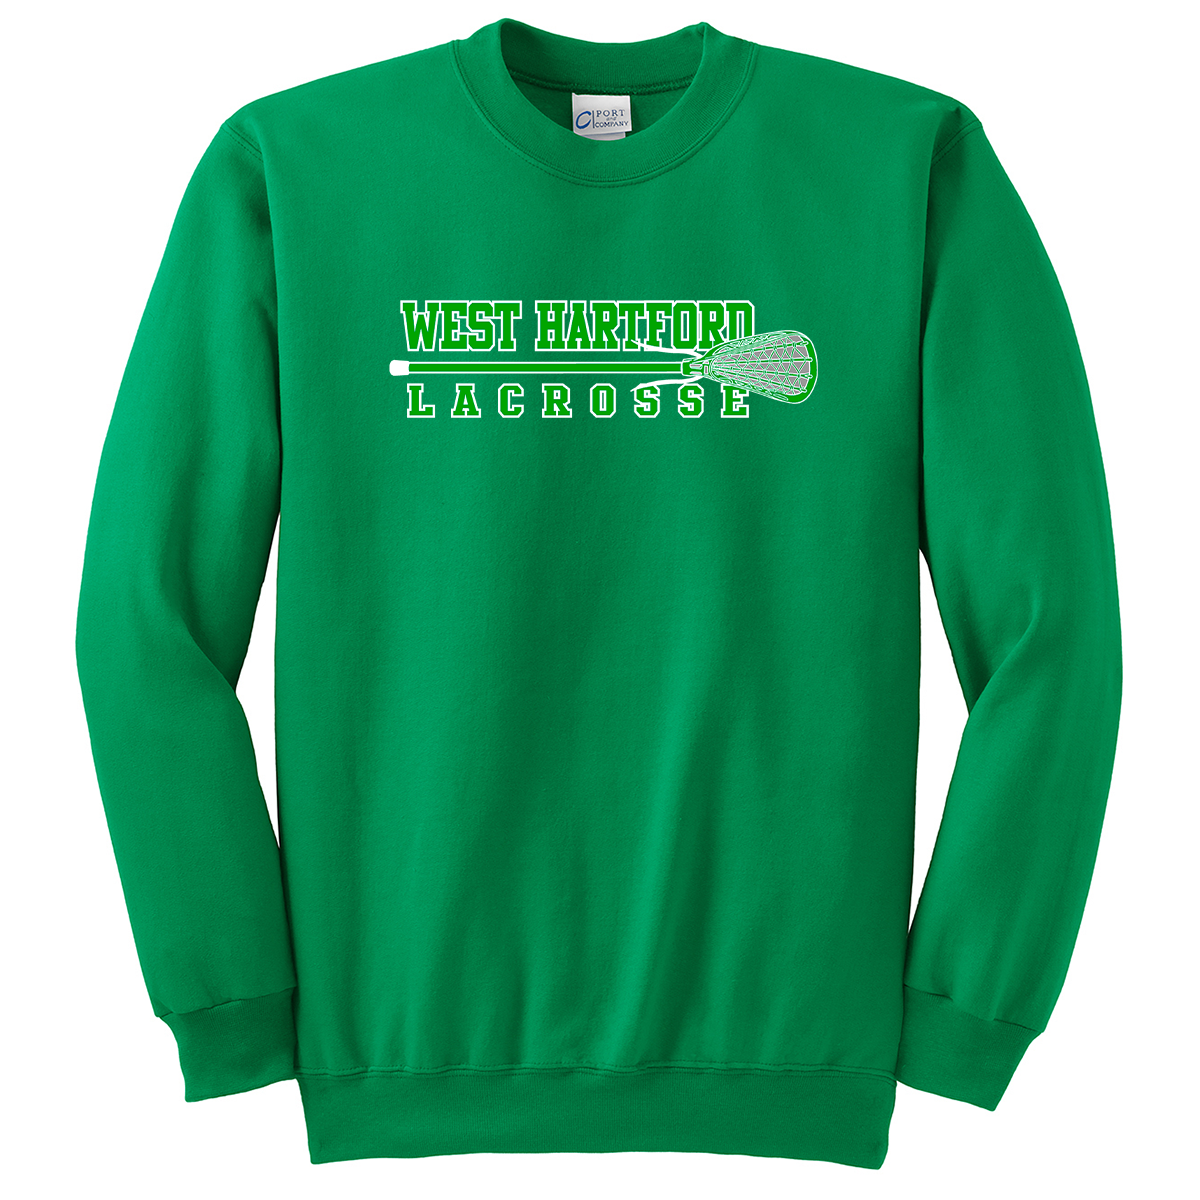 West Hartford Lacrosse Crew Neck Sweater